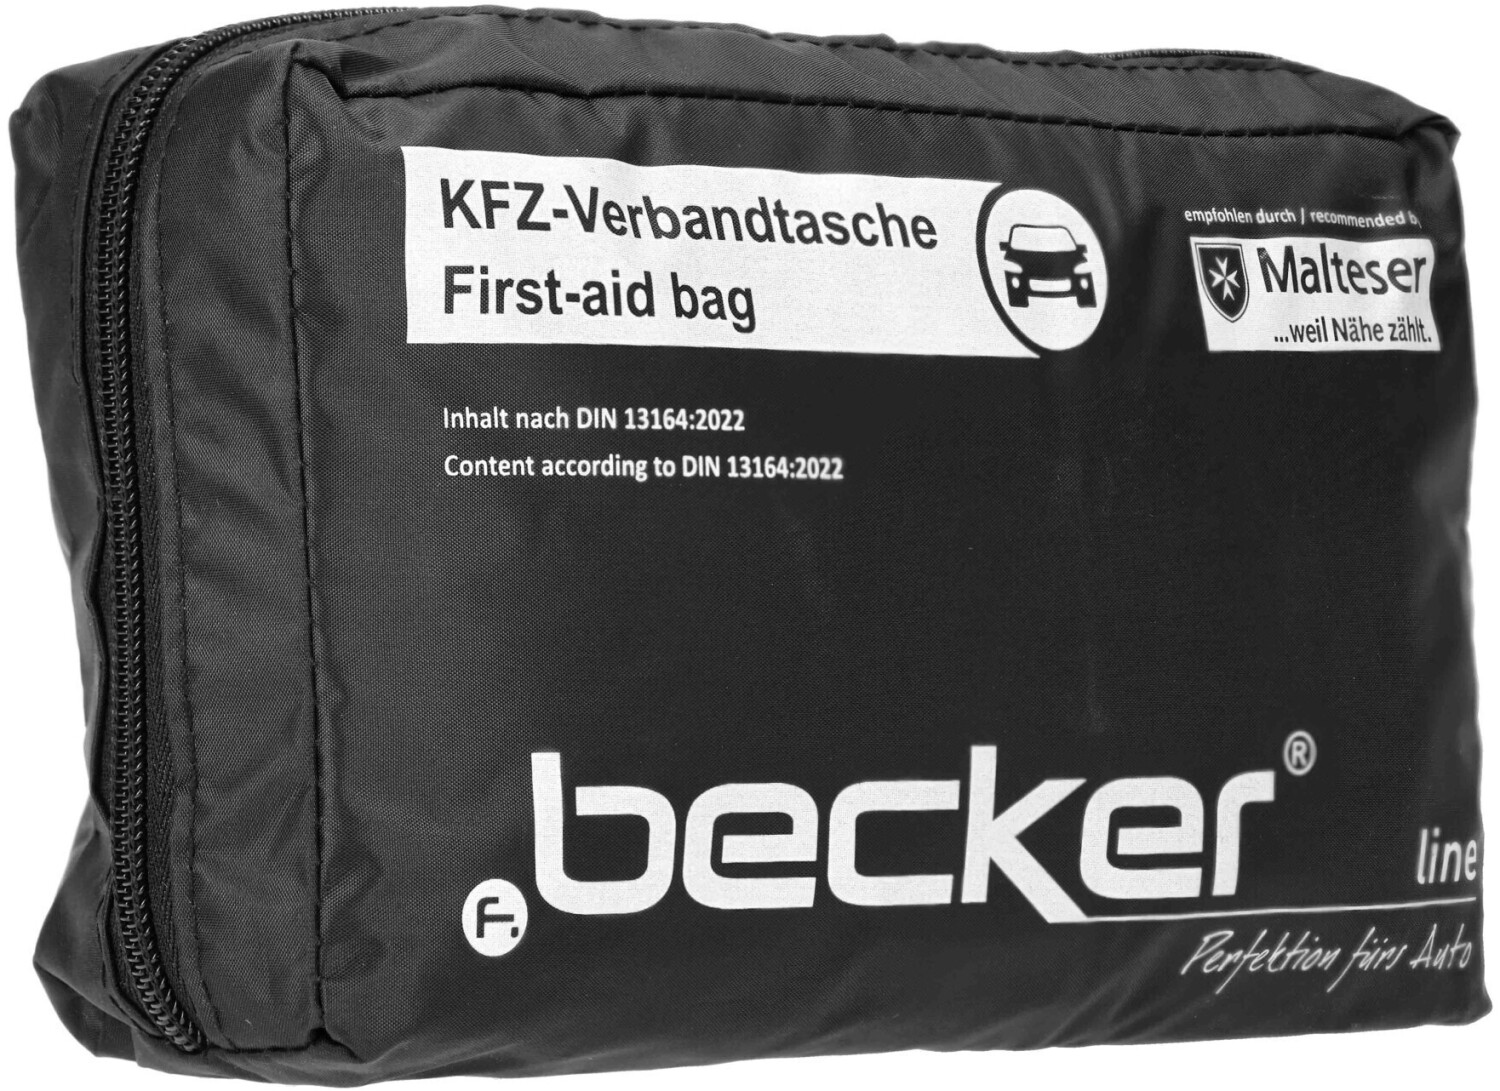 f.becker_line KFZ-Verbandtasche DIN 13164 ab 7,15 €